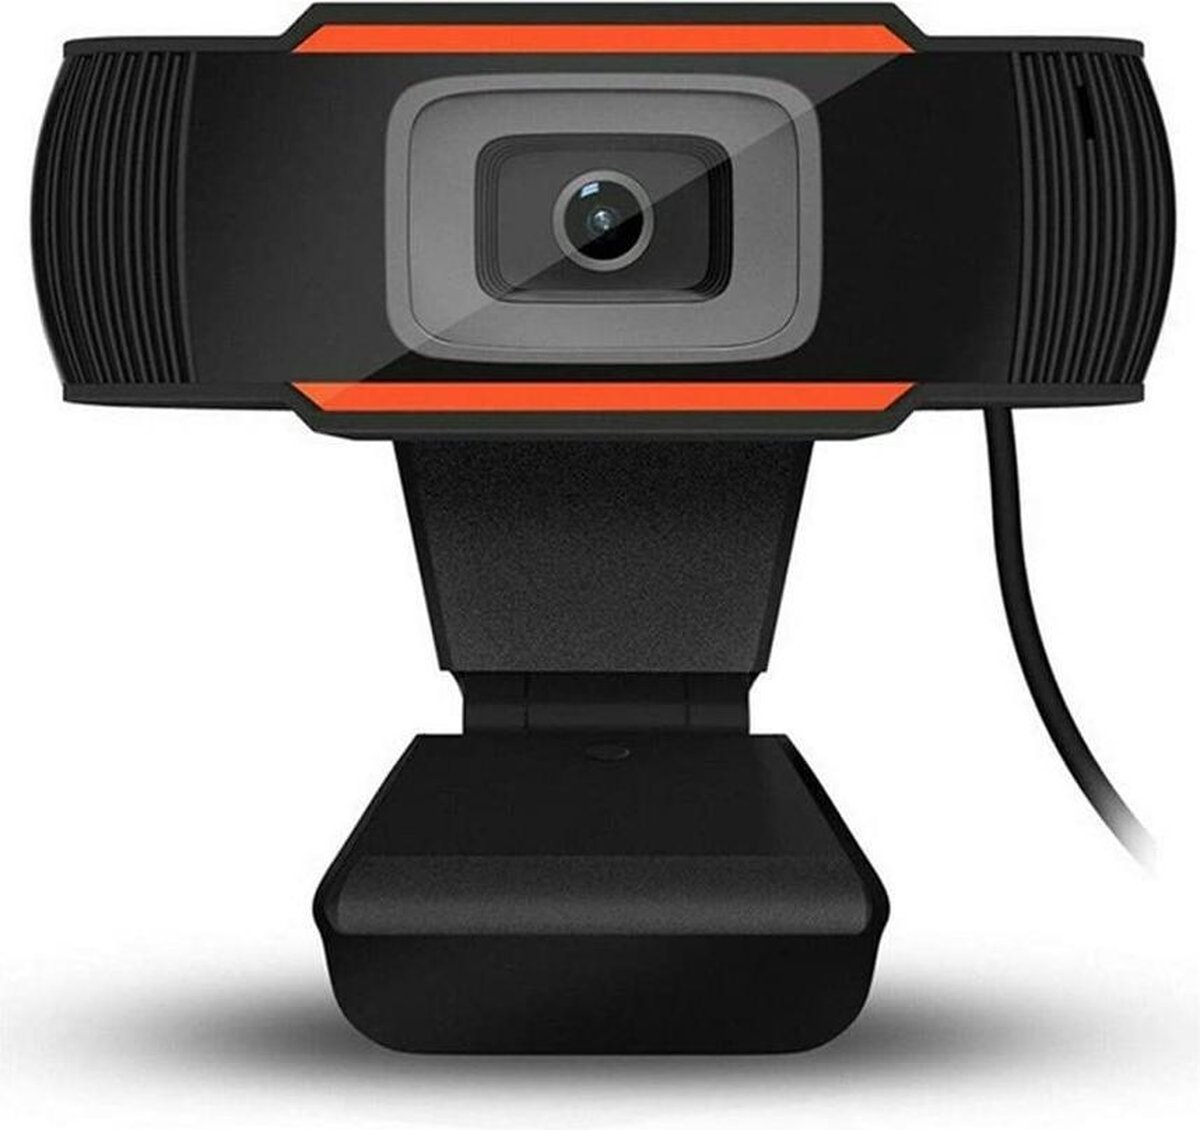 Webcam 1080P Full HD Camera, USB Streaming